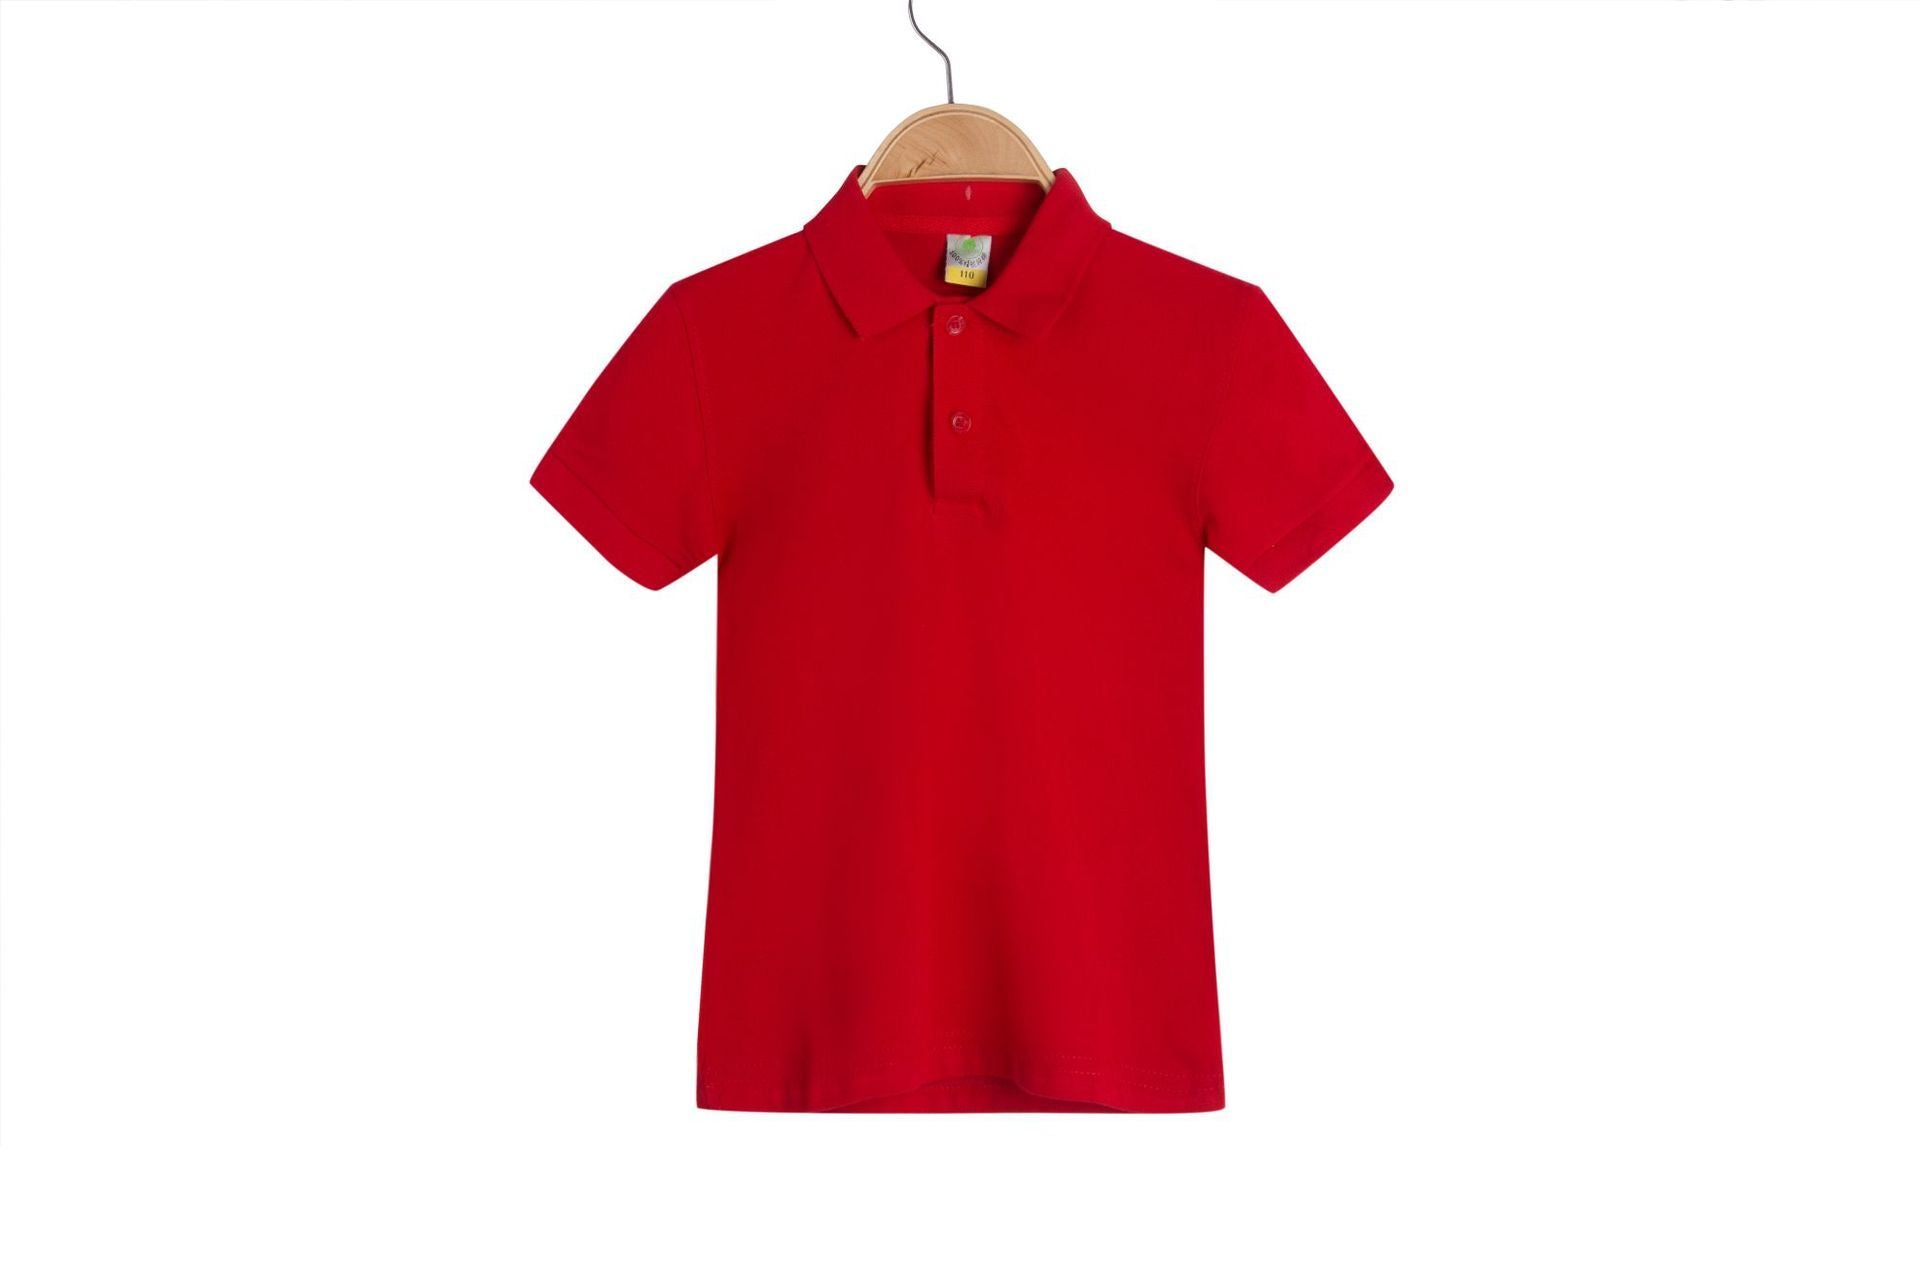 New Children's Clothing Lapel Short-sleeved Cotton Advertising Shirt T-shirt